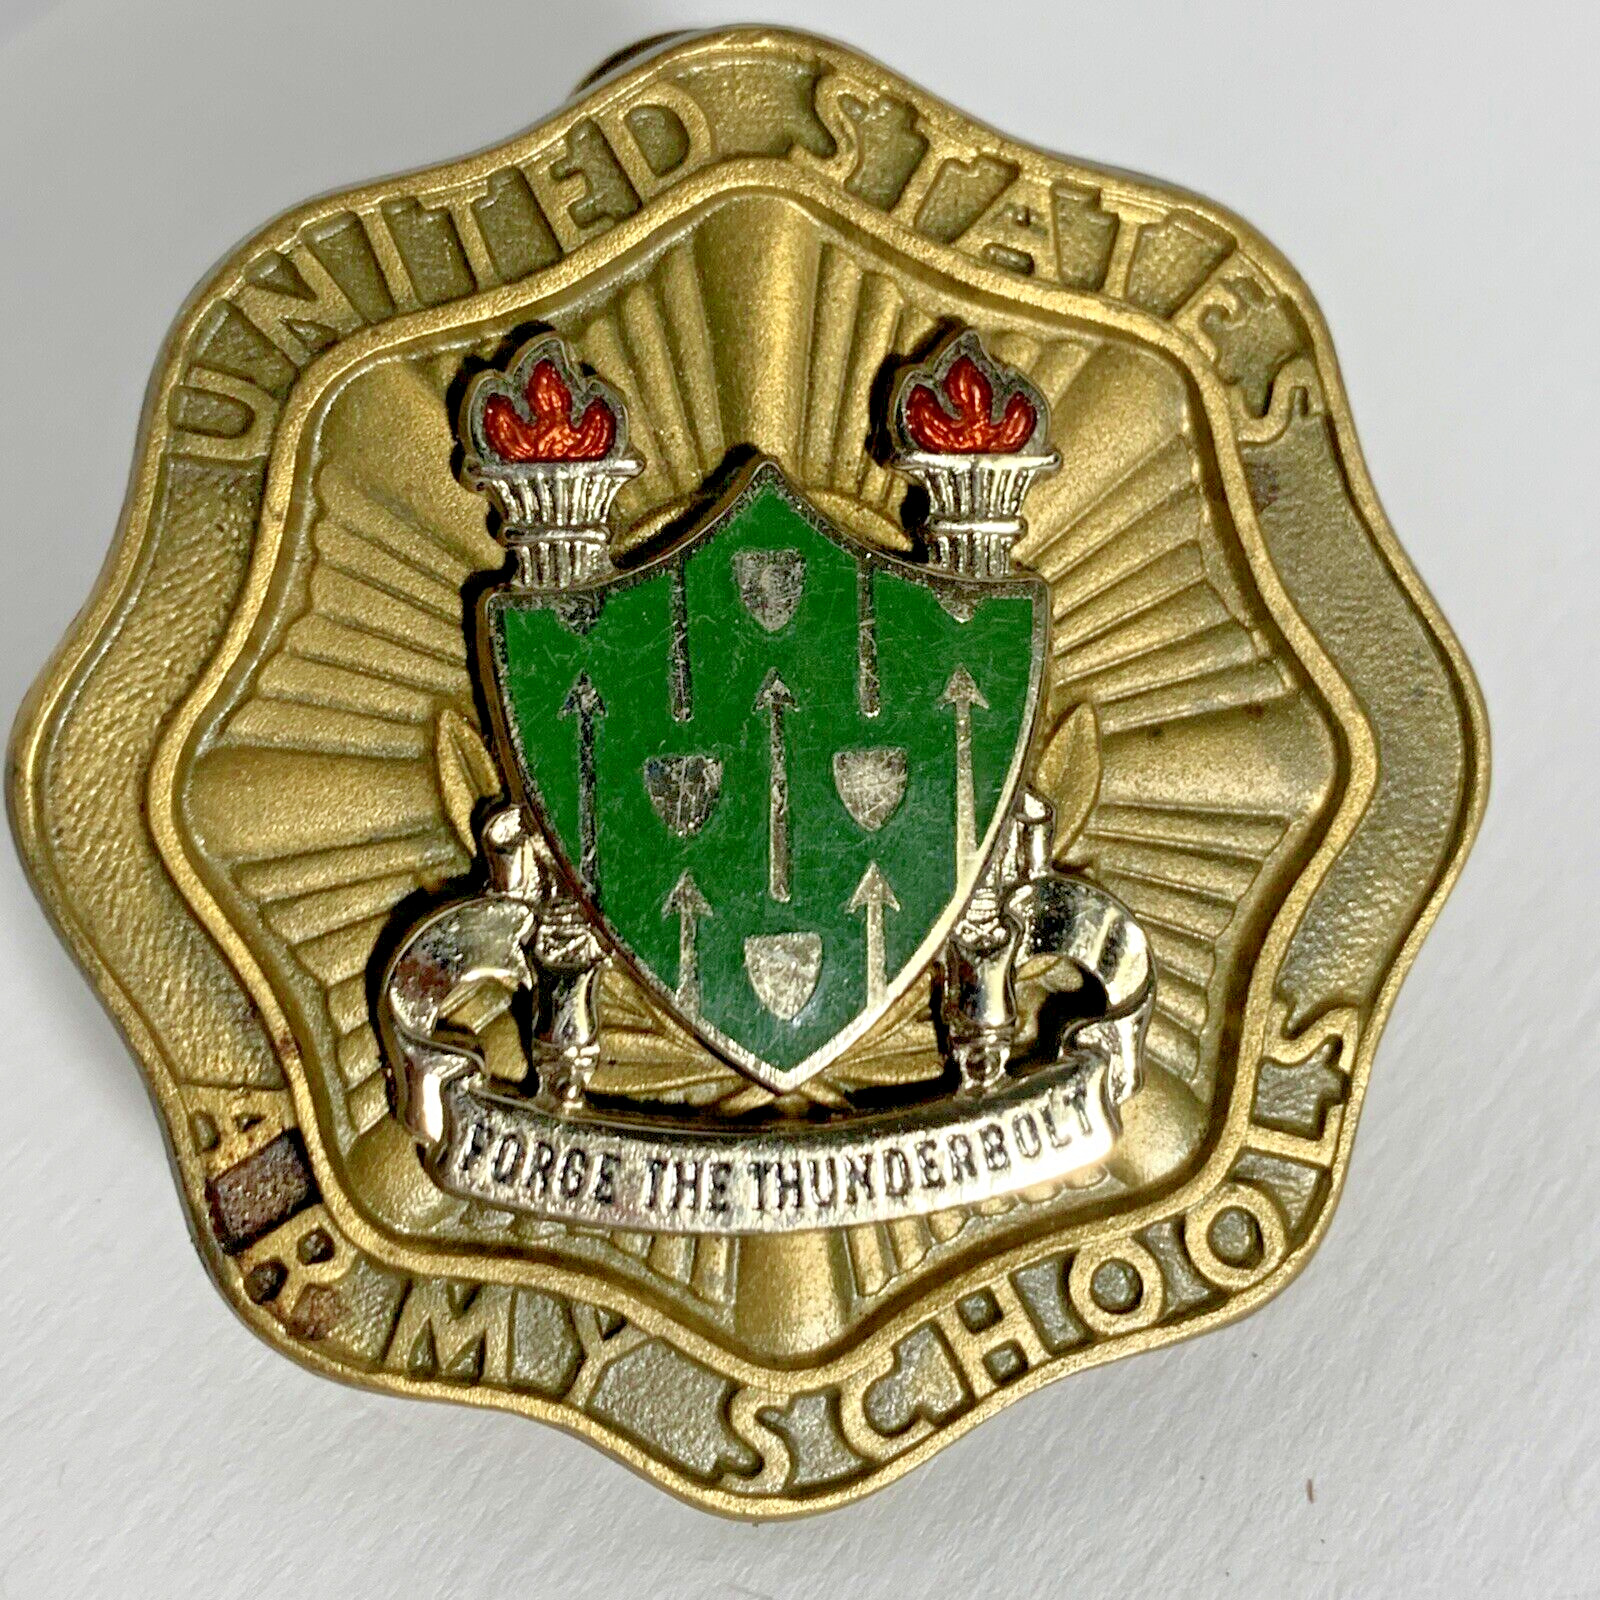 Vintage US Army Armor School Unit Military Pin Badge Medal Medallion Thunderbolt